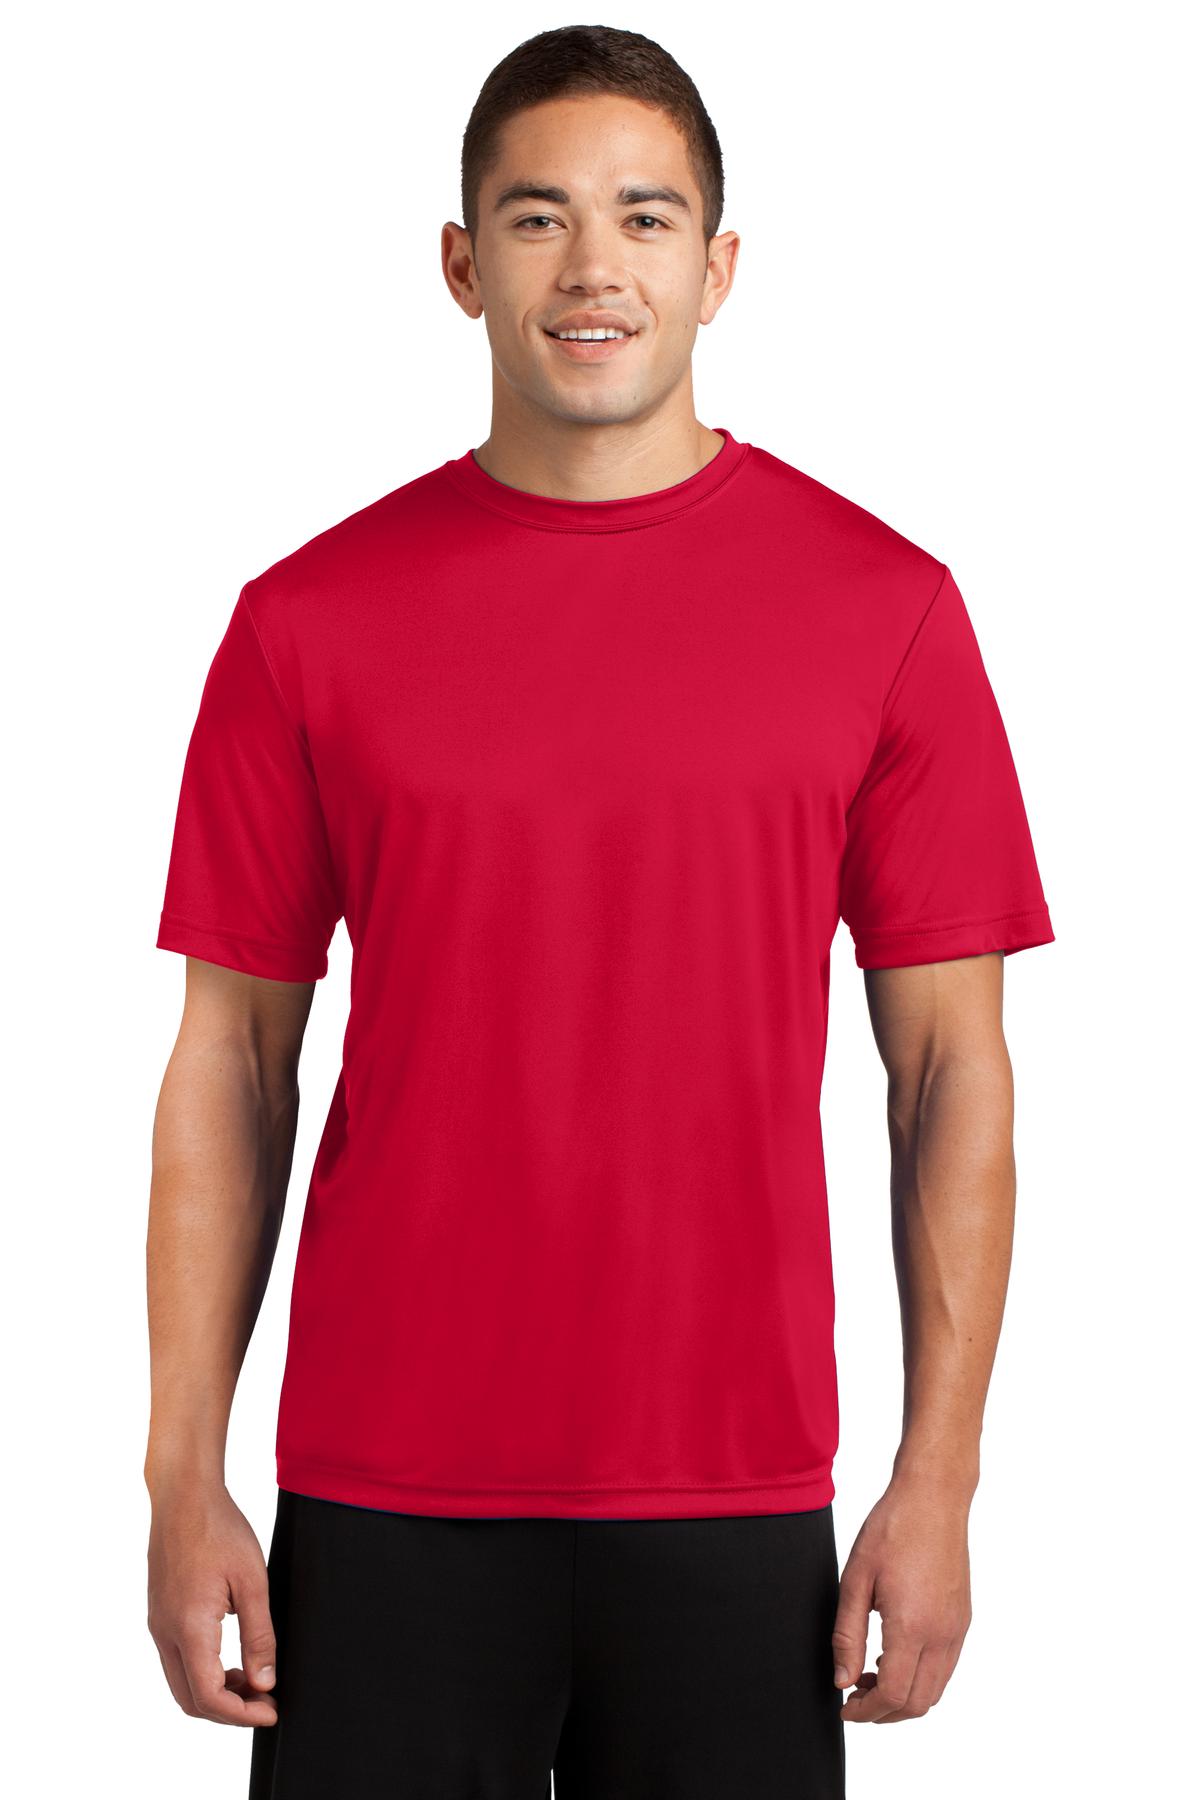 Athflex Red Sigma Gym Compression T-Shirt